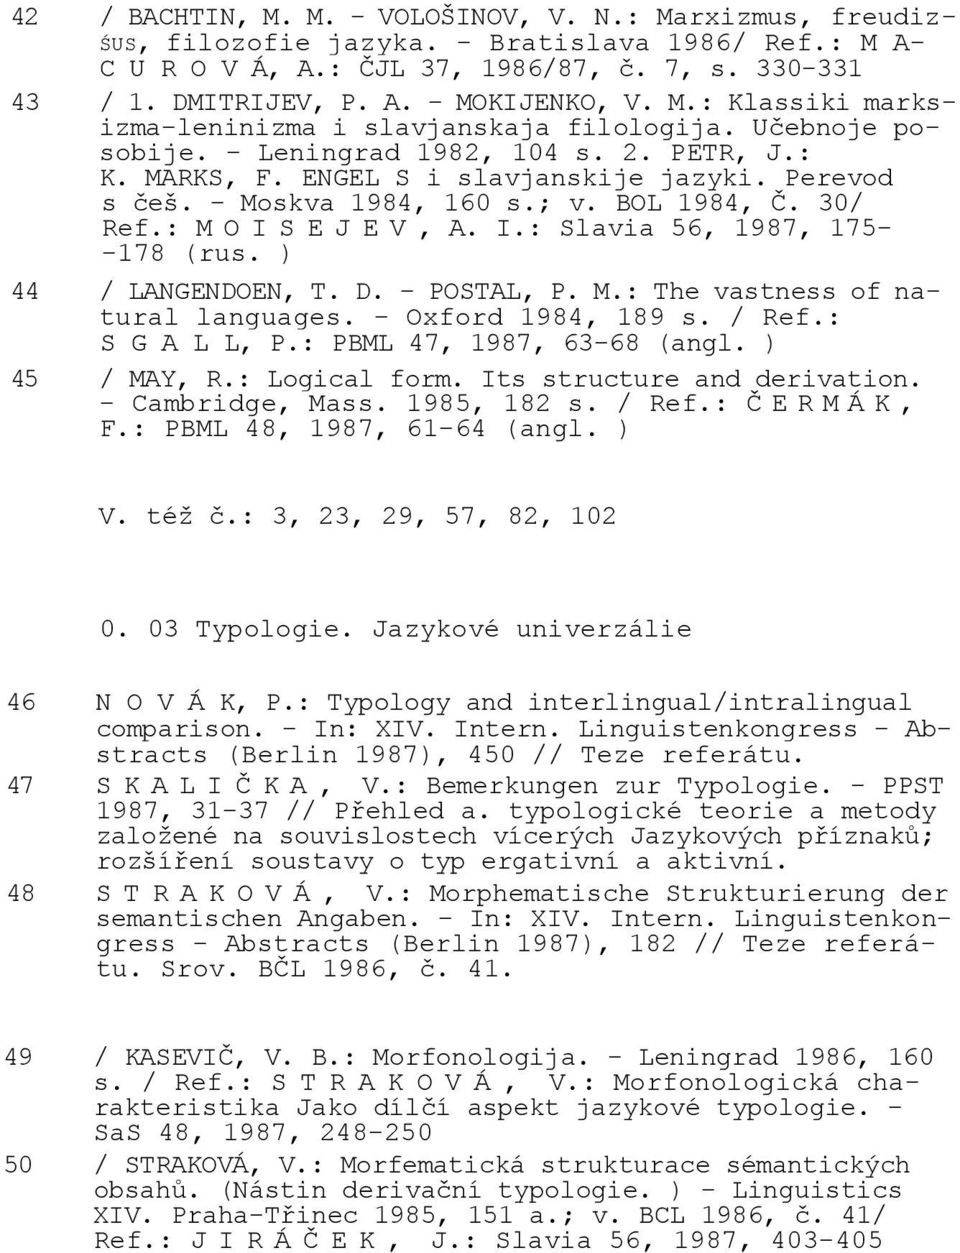 ; v. BOL 1984, Ĉ. 30/ Ref.: M OISEJEV, A. I.: Slavia 56, 1987, 175- -178 (rus. ) 44 / LANGENDOEN, T. D. - POSTAL, P. M.: The vastness of natural languages. - Oxford 1984, 189 s. / Ref.: S G A L L, P.